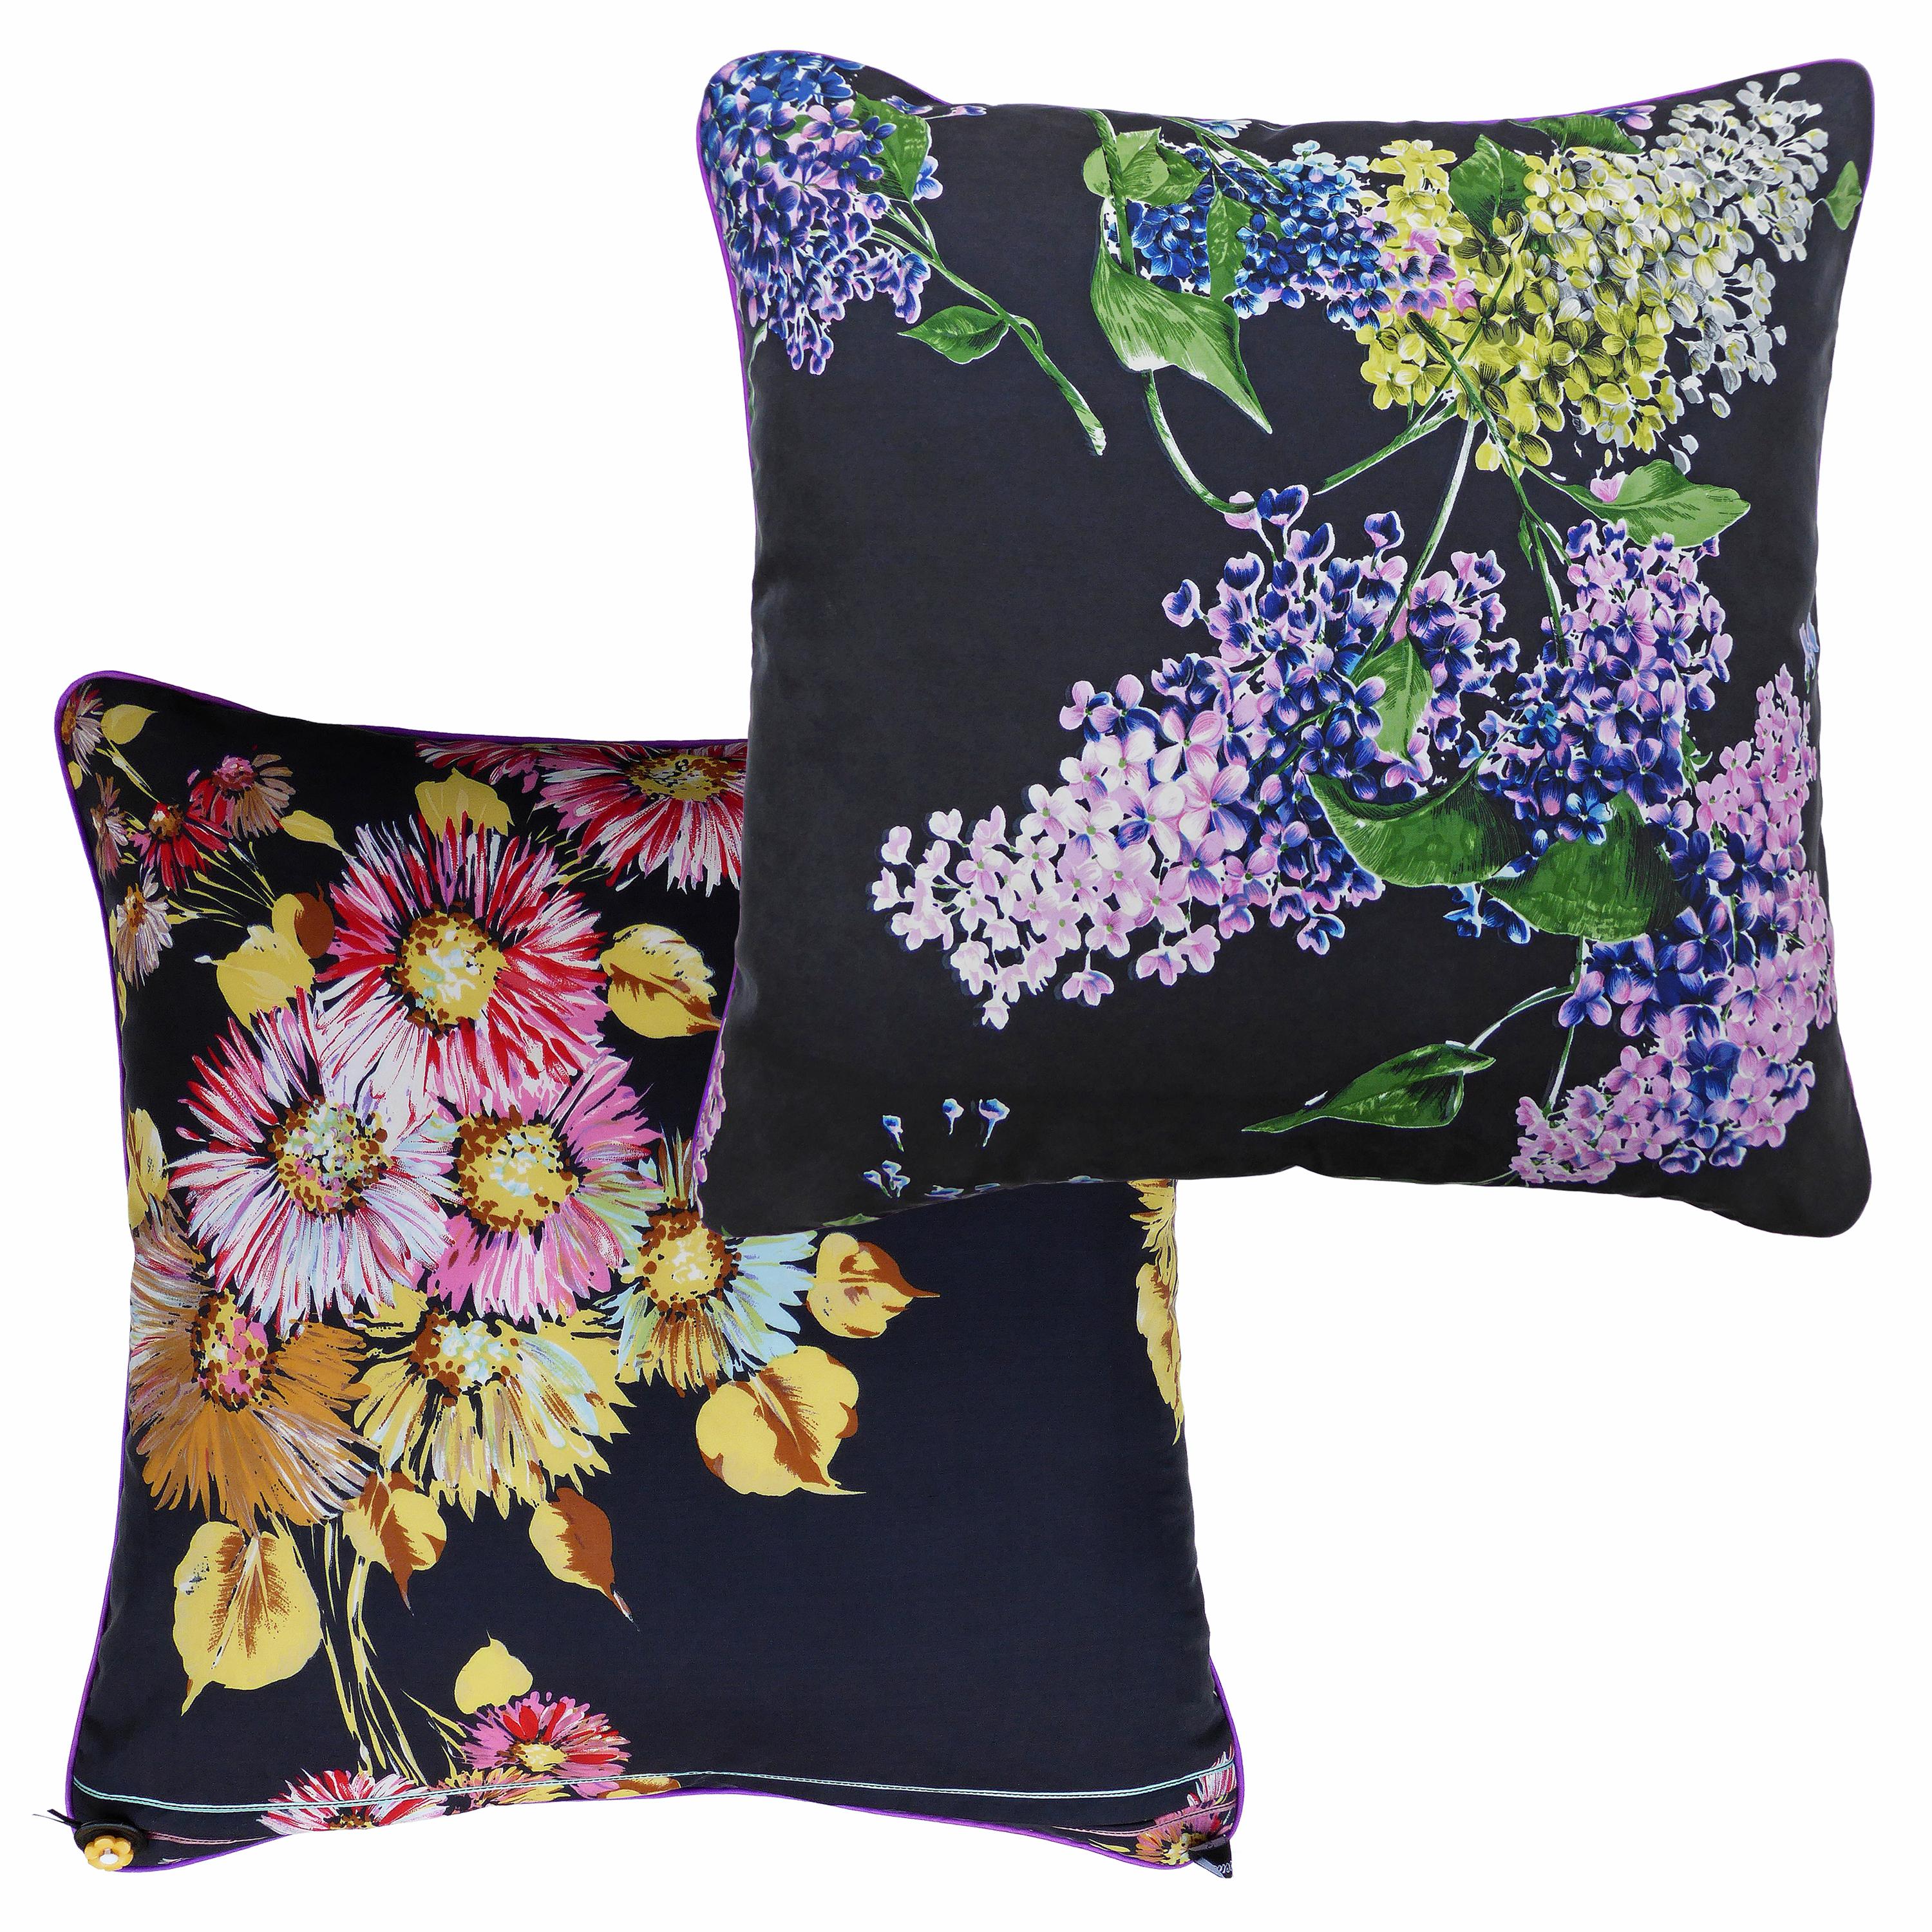 Organic Modern Vintage Cushions 'Hydrangeas' Bespoke Luxury Silk Pillow/Cushion, Made in Uk